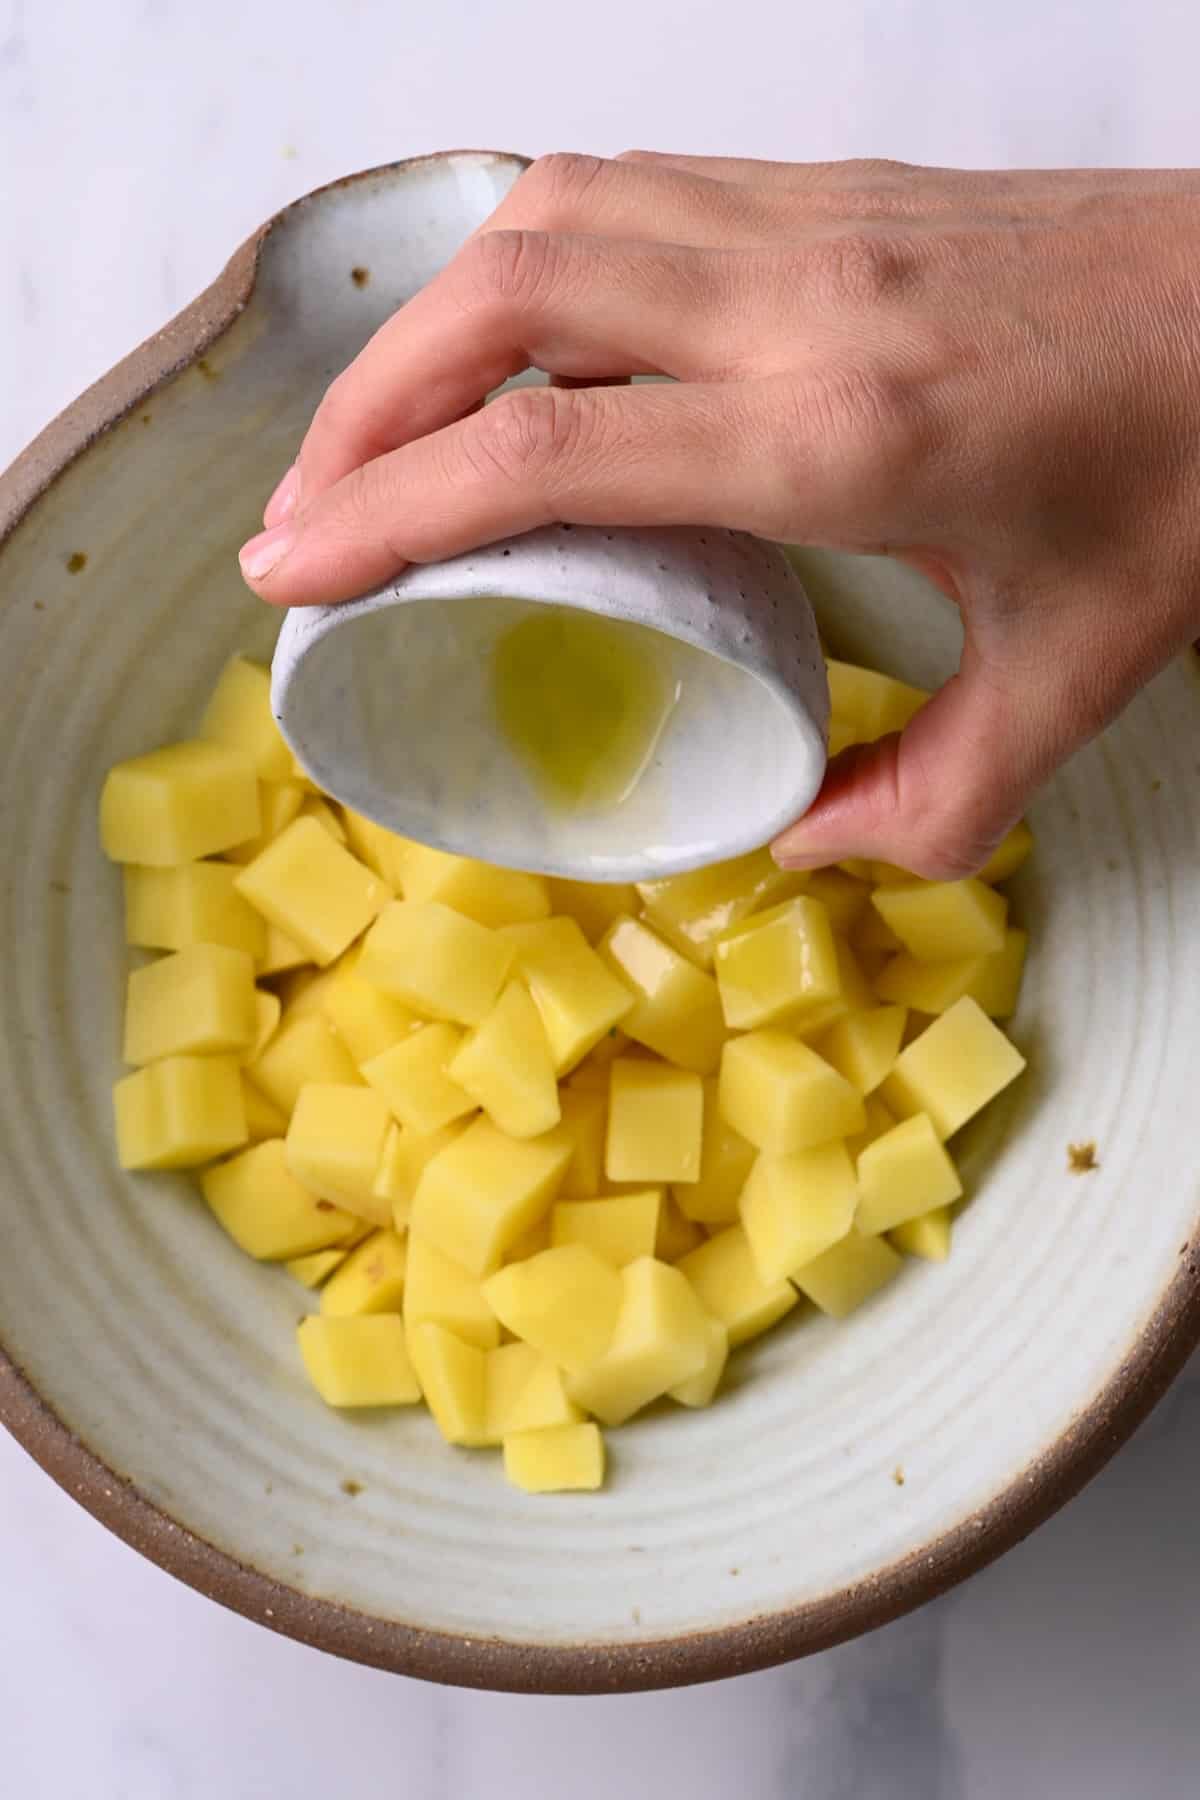 Adding oil to chopped potatoes